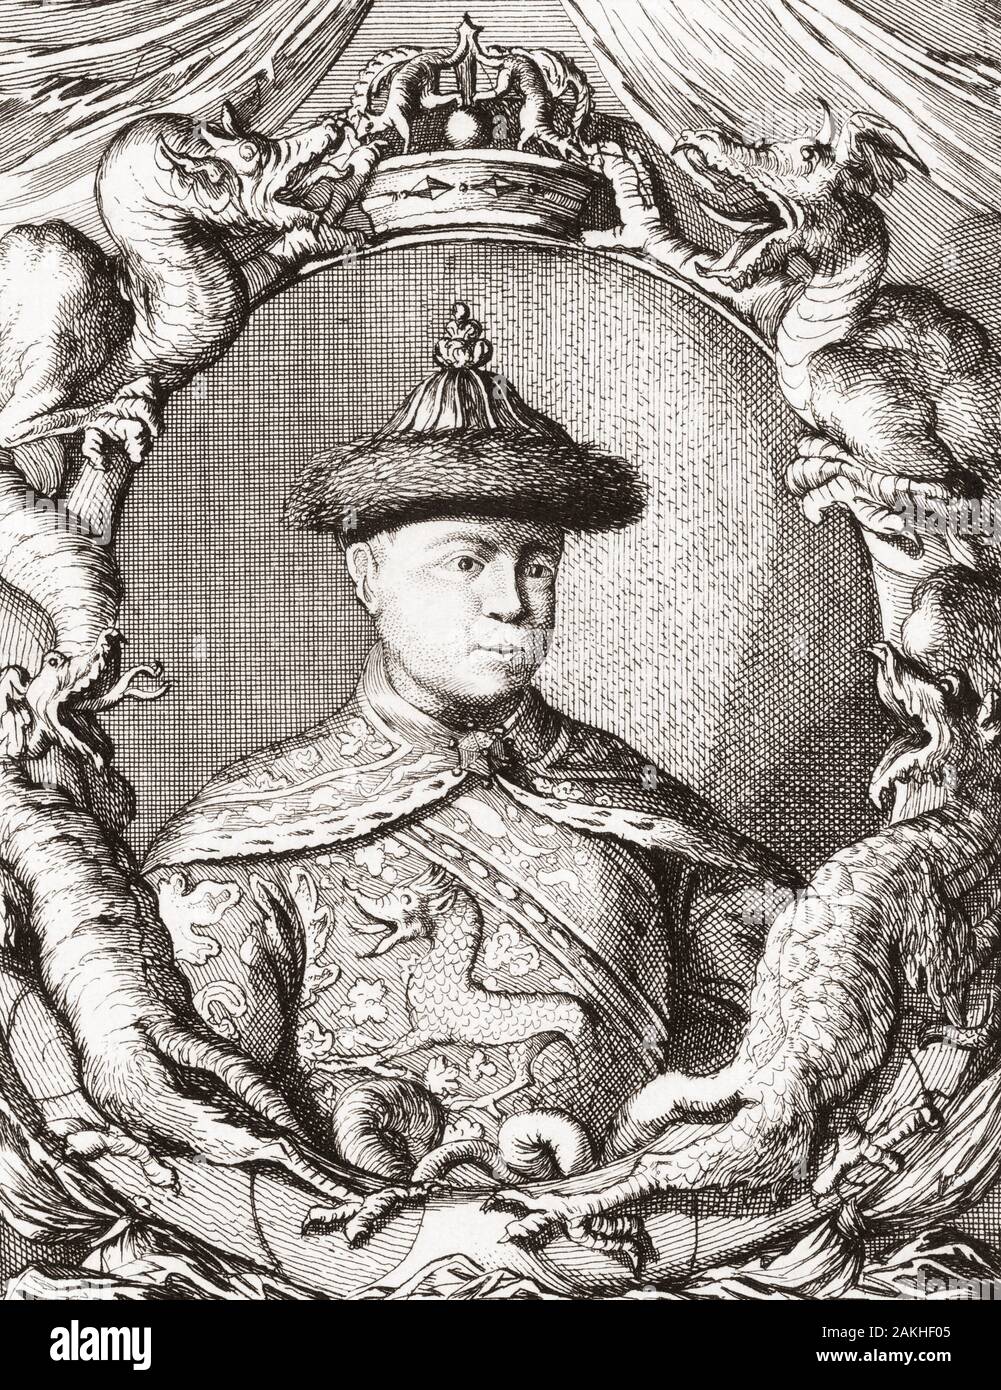 L'Empereur Kangxi, 1654 - 1722, né Aisin Gioro Xuanye, quatrième Empereur de la dynastie Qing. Banque D'Images